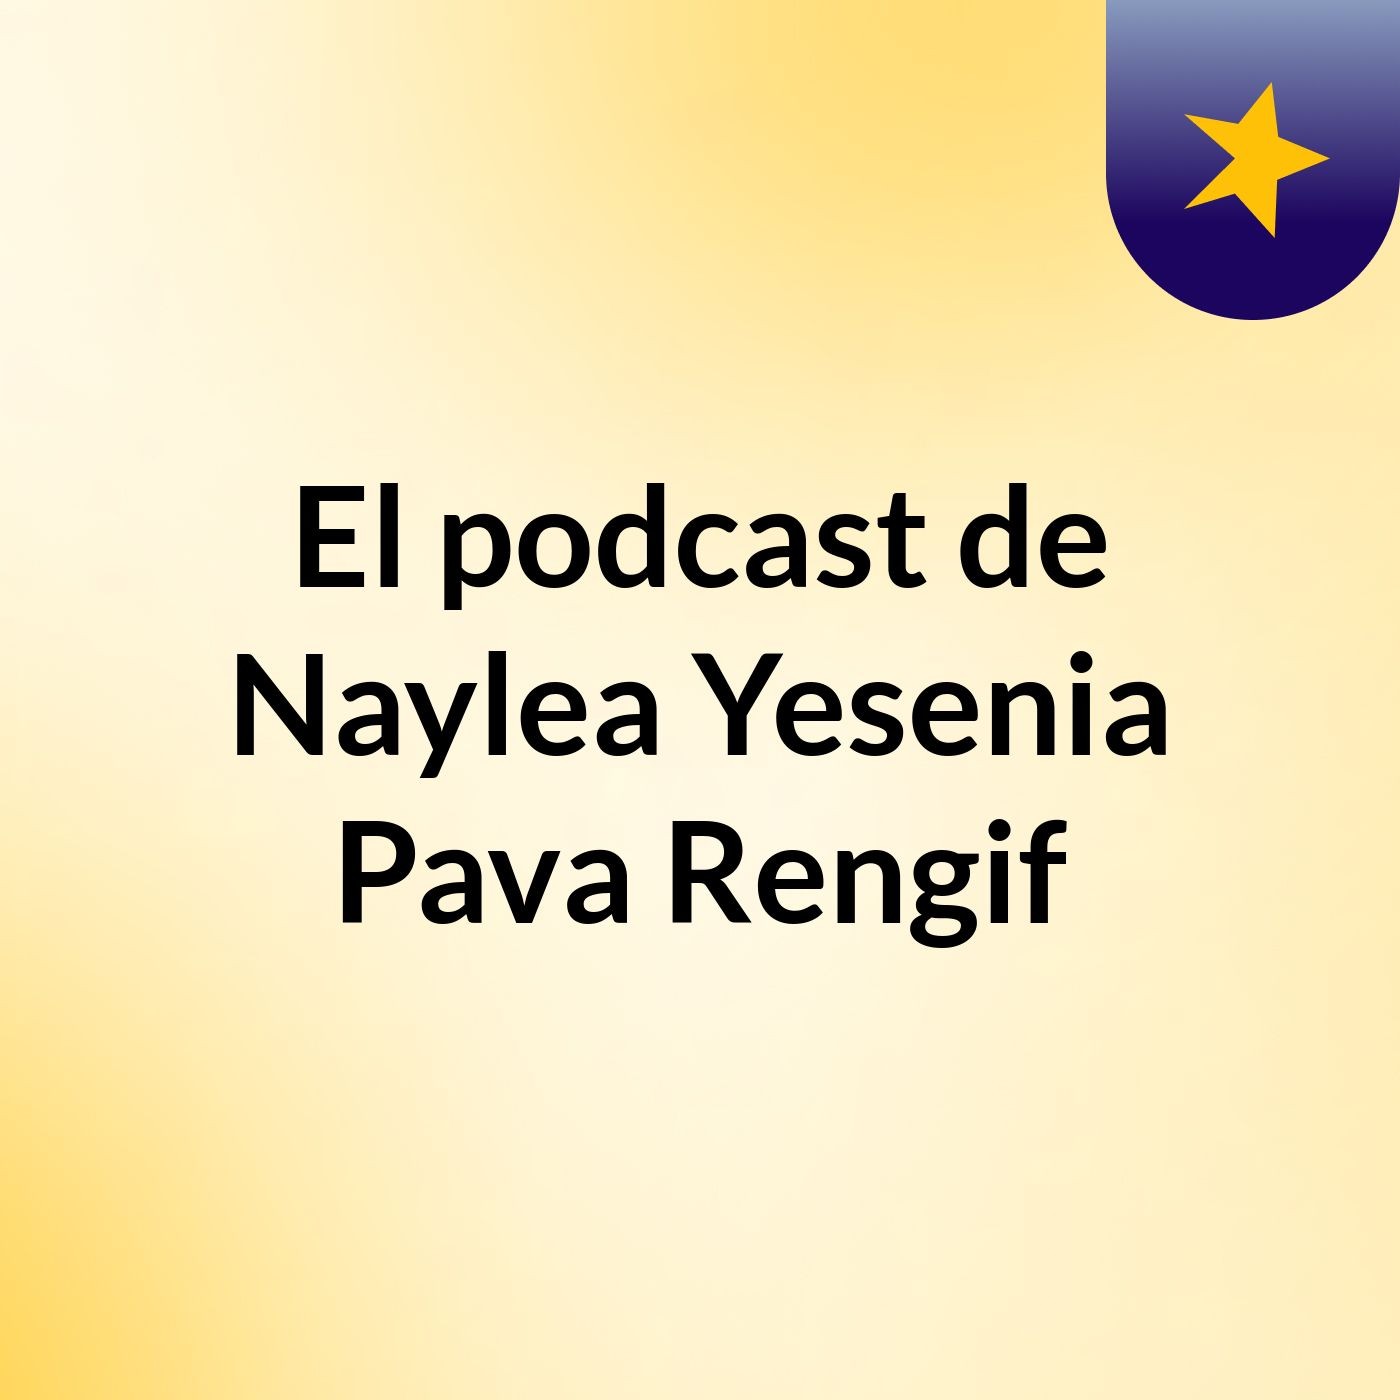 El podcast de Naylea Yesenia Pava Rengif